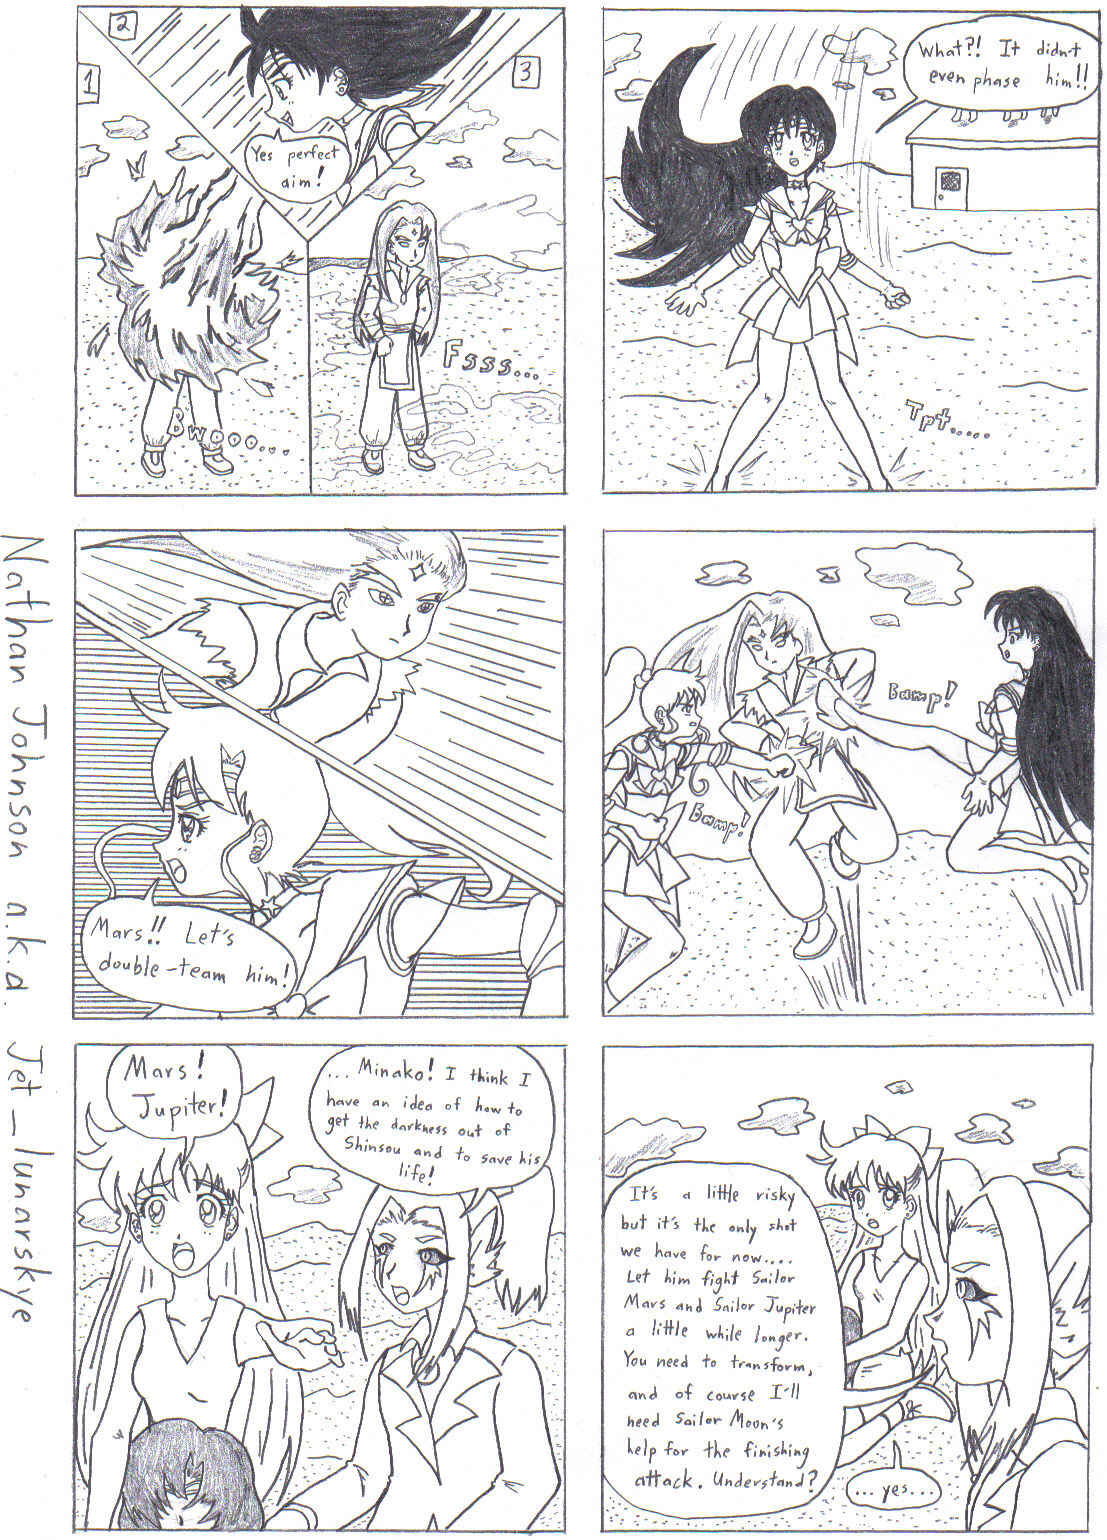 A Soldier's Love: Page 33 by Jet_lunarskye